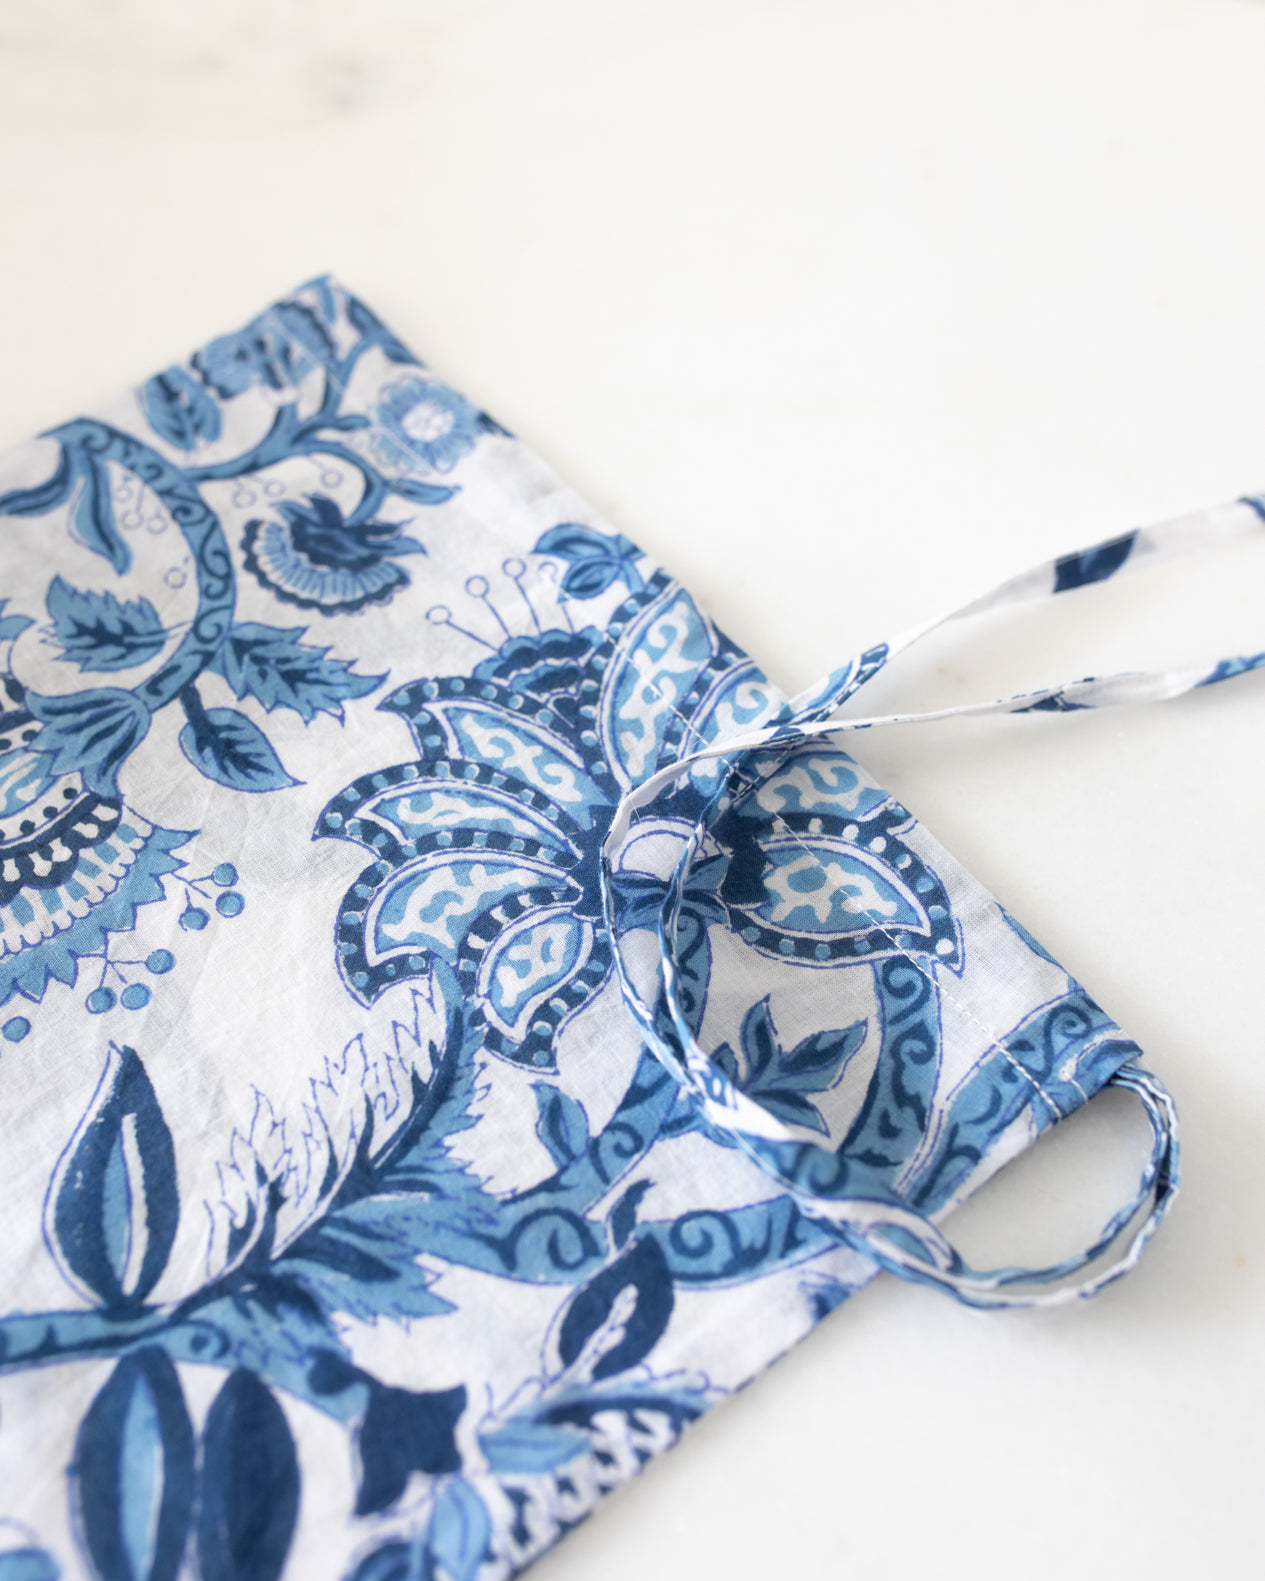 Bleu and White Floral Drawstring Bags